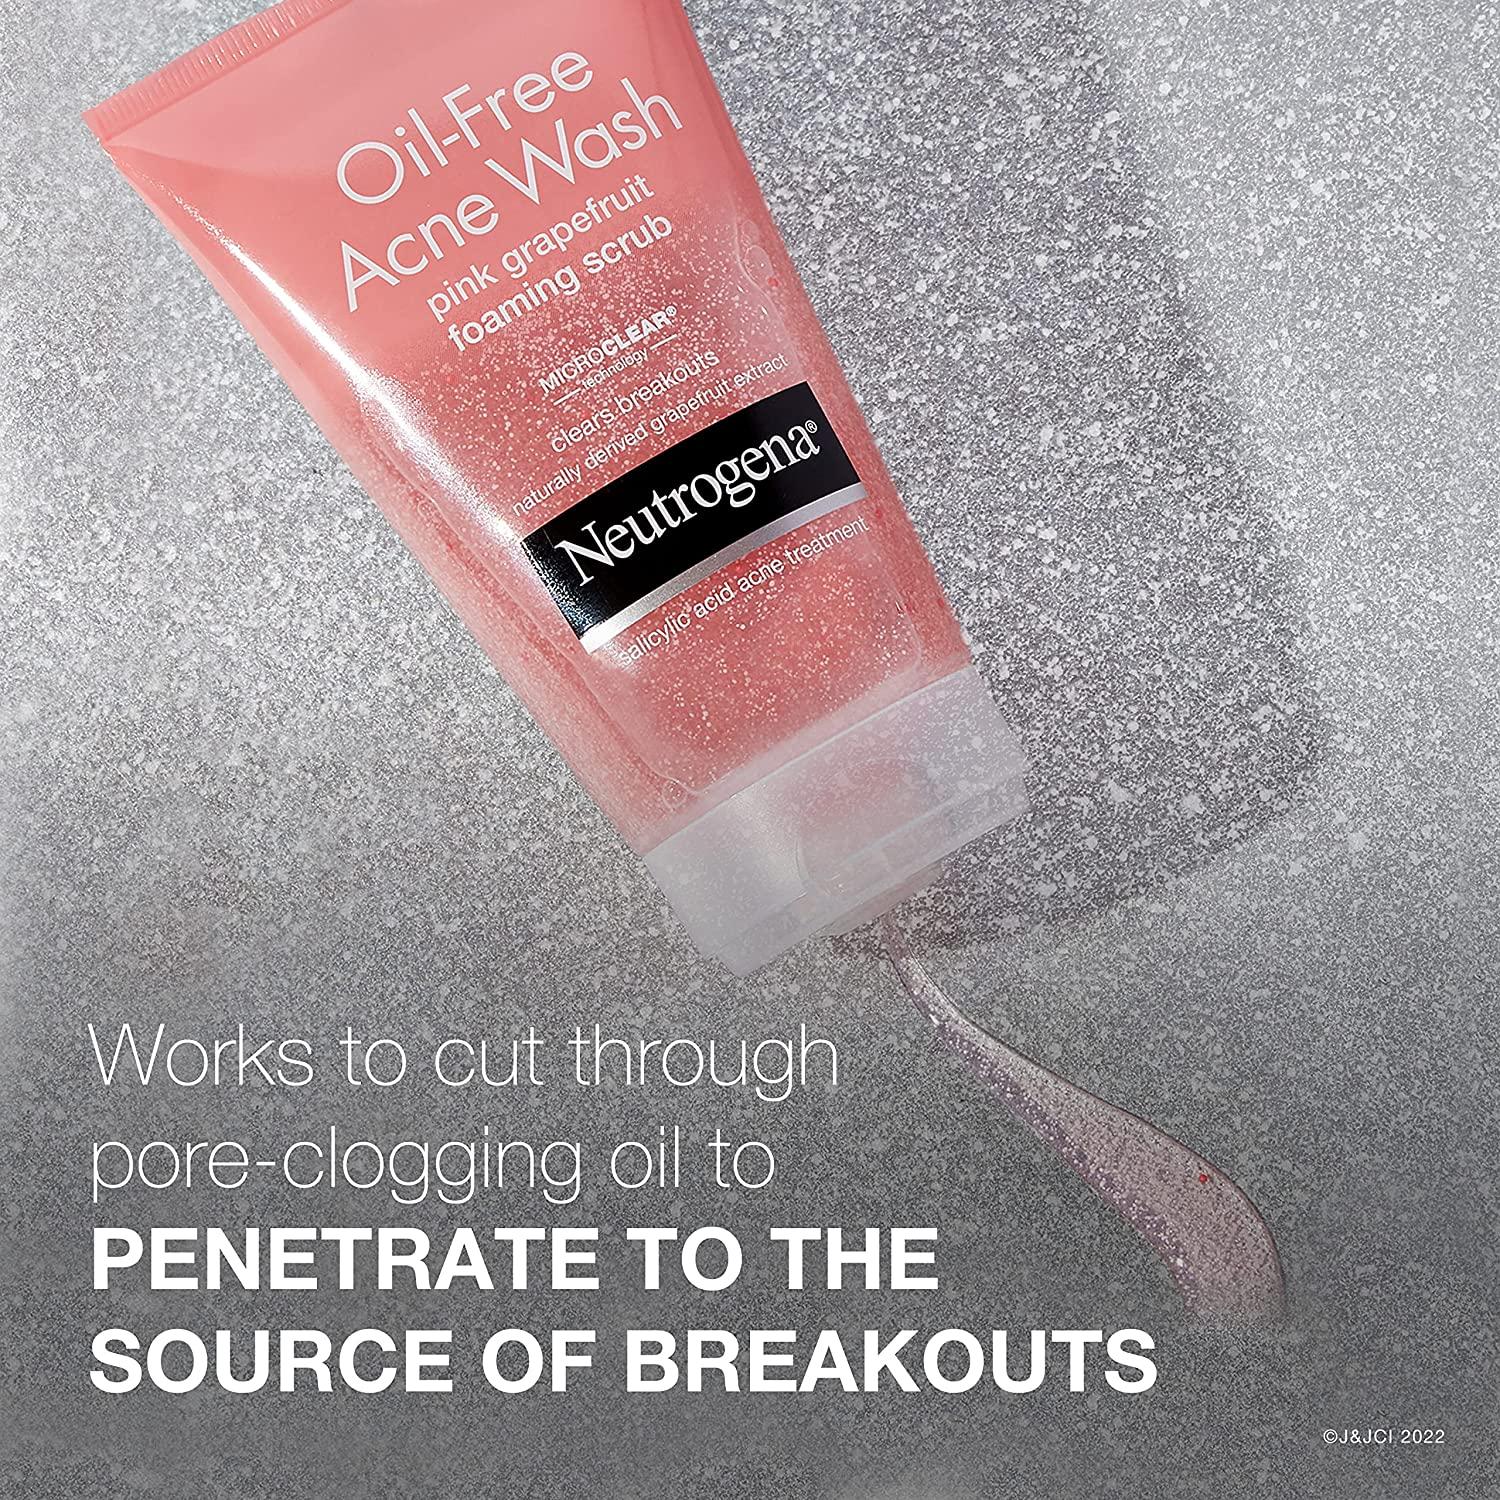 Oil-Free Acne Wash, Pink Grapefruit Facial Cleanser, 9.1 fl oz